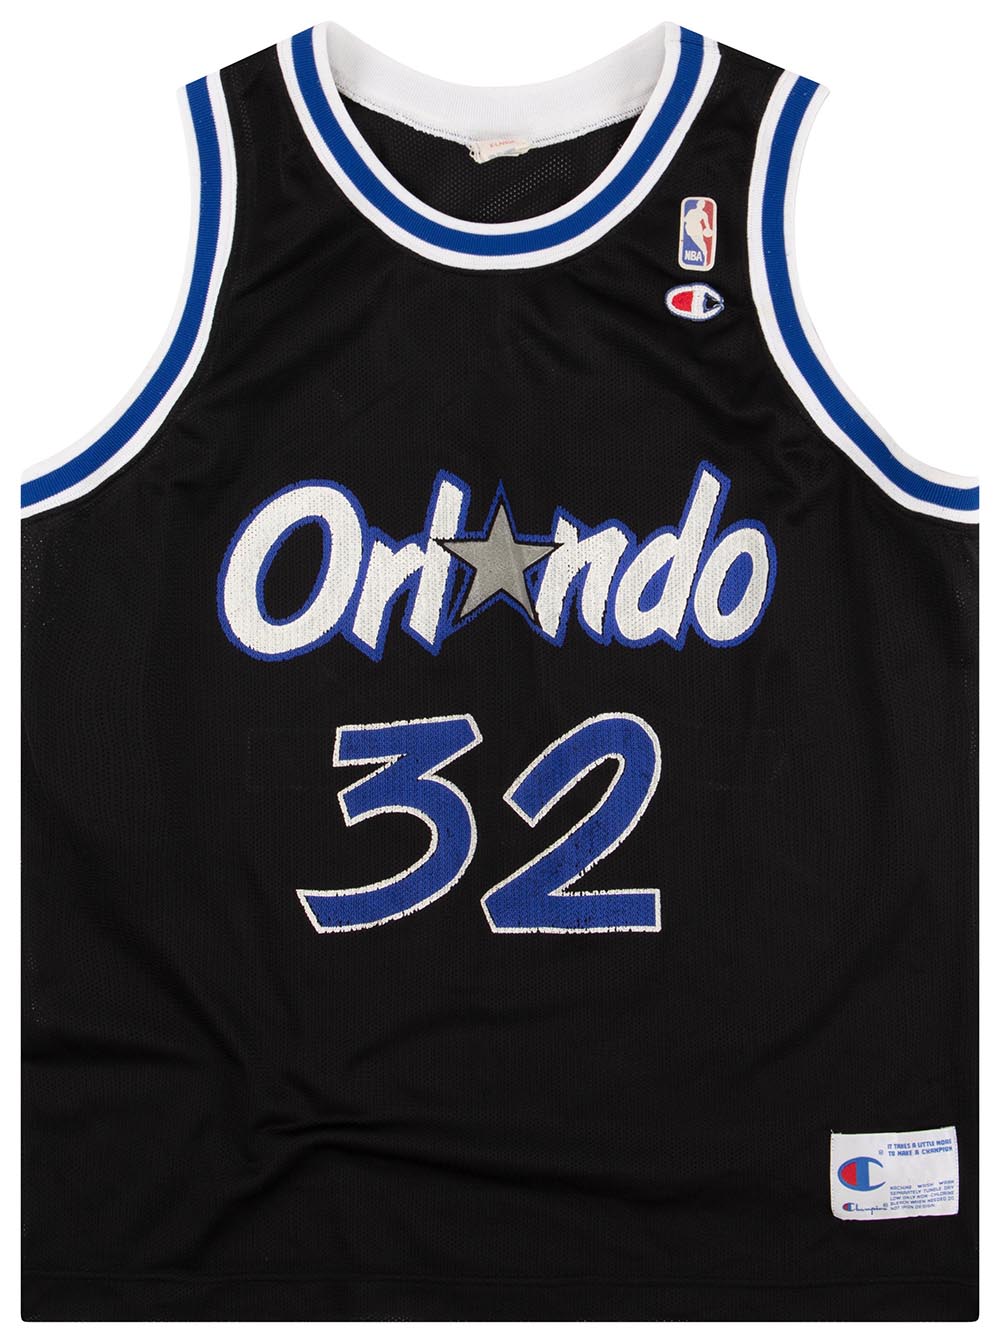 Champion Orlando Magic jersey 32 Shaquille O'Neal NBA Florida